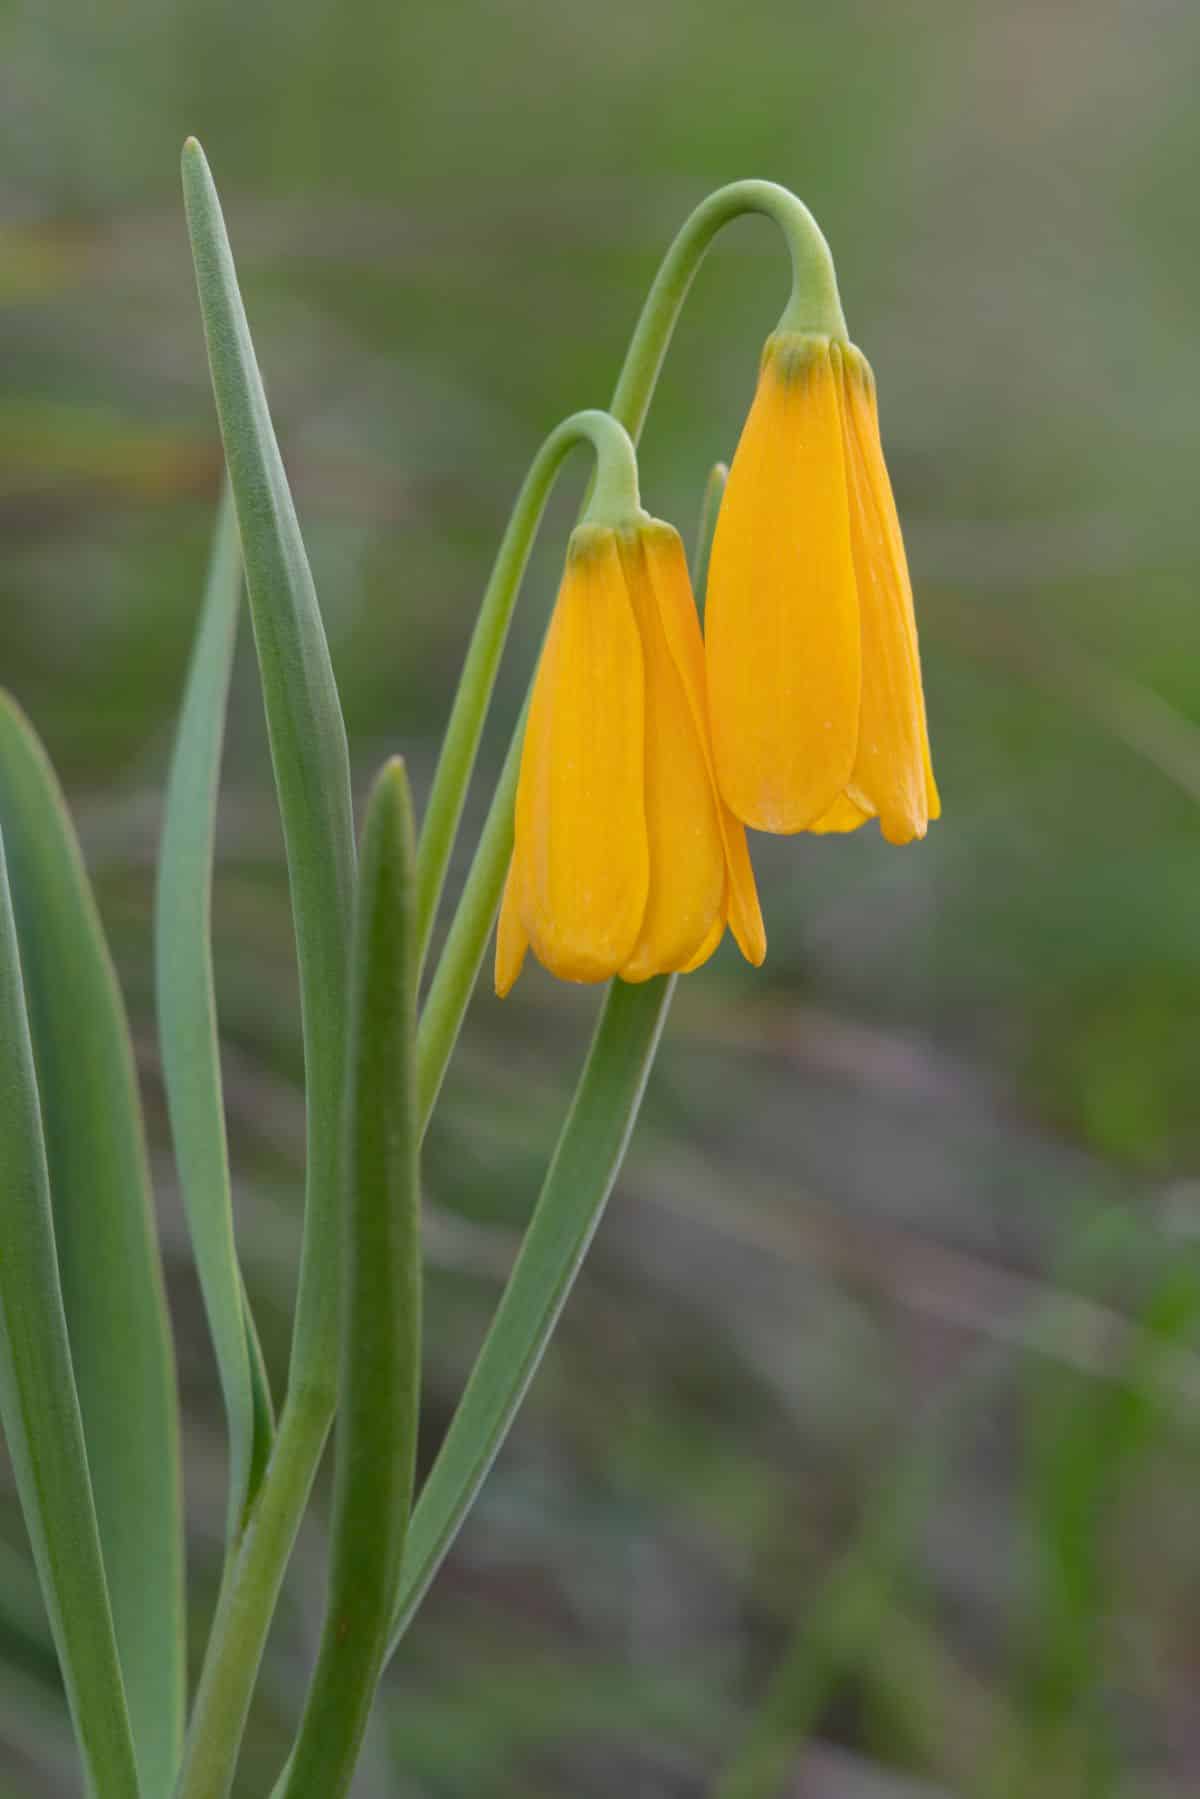 A delicately nodding hardy yellow fritillary flower